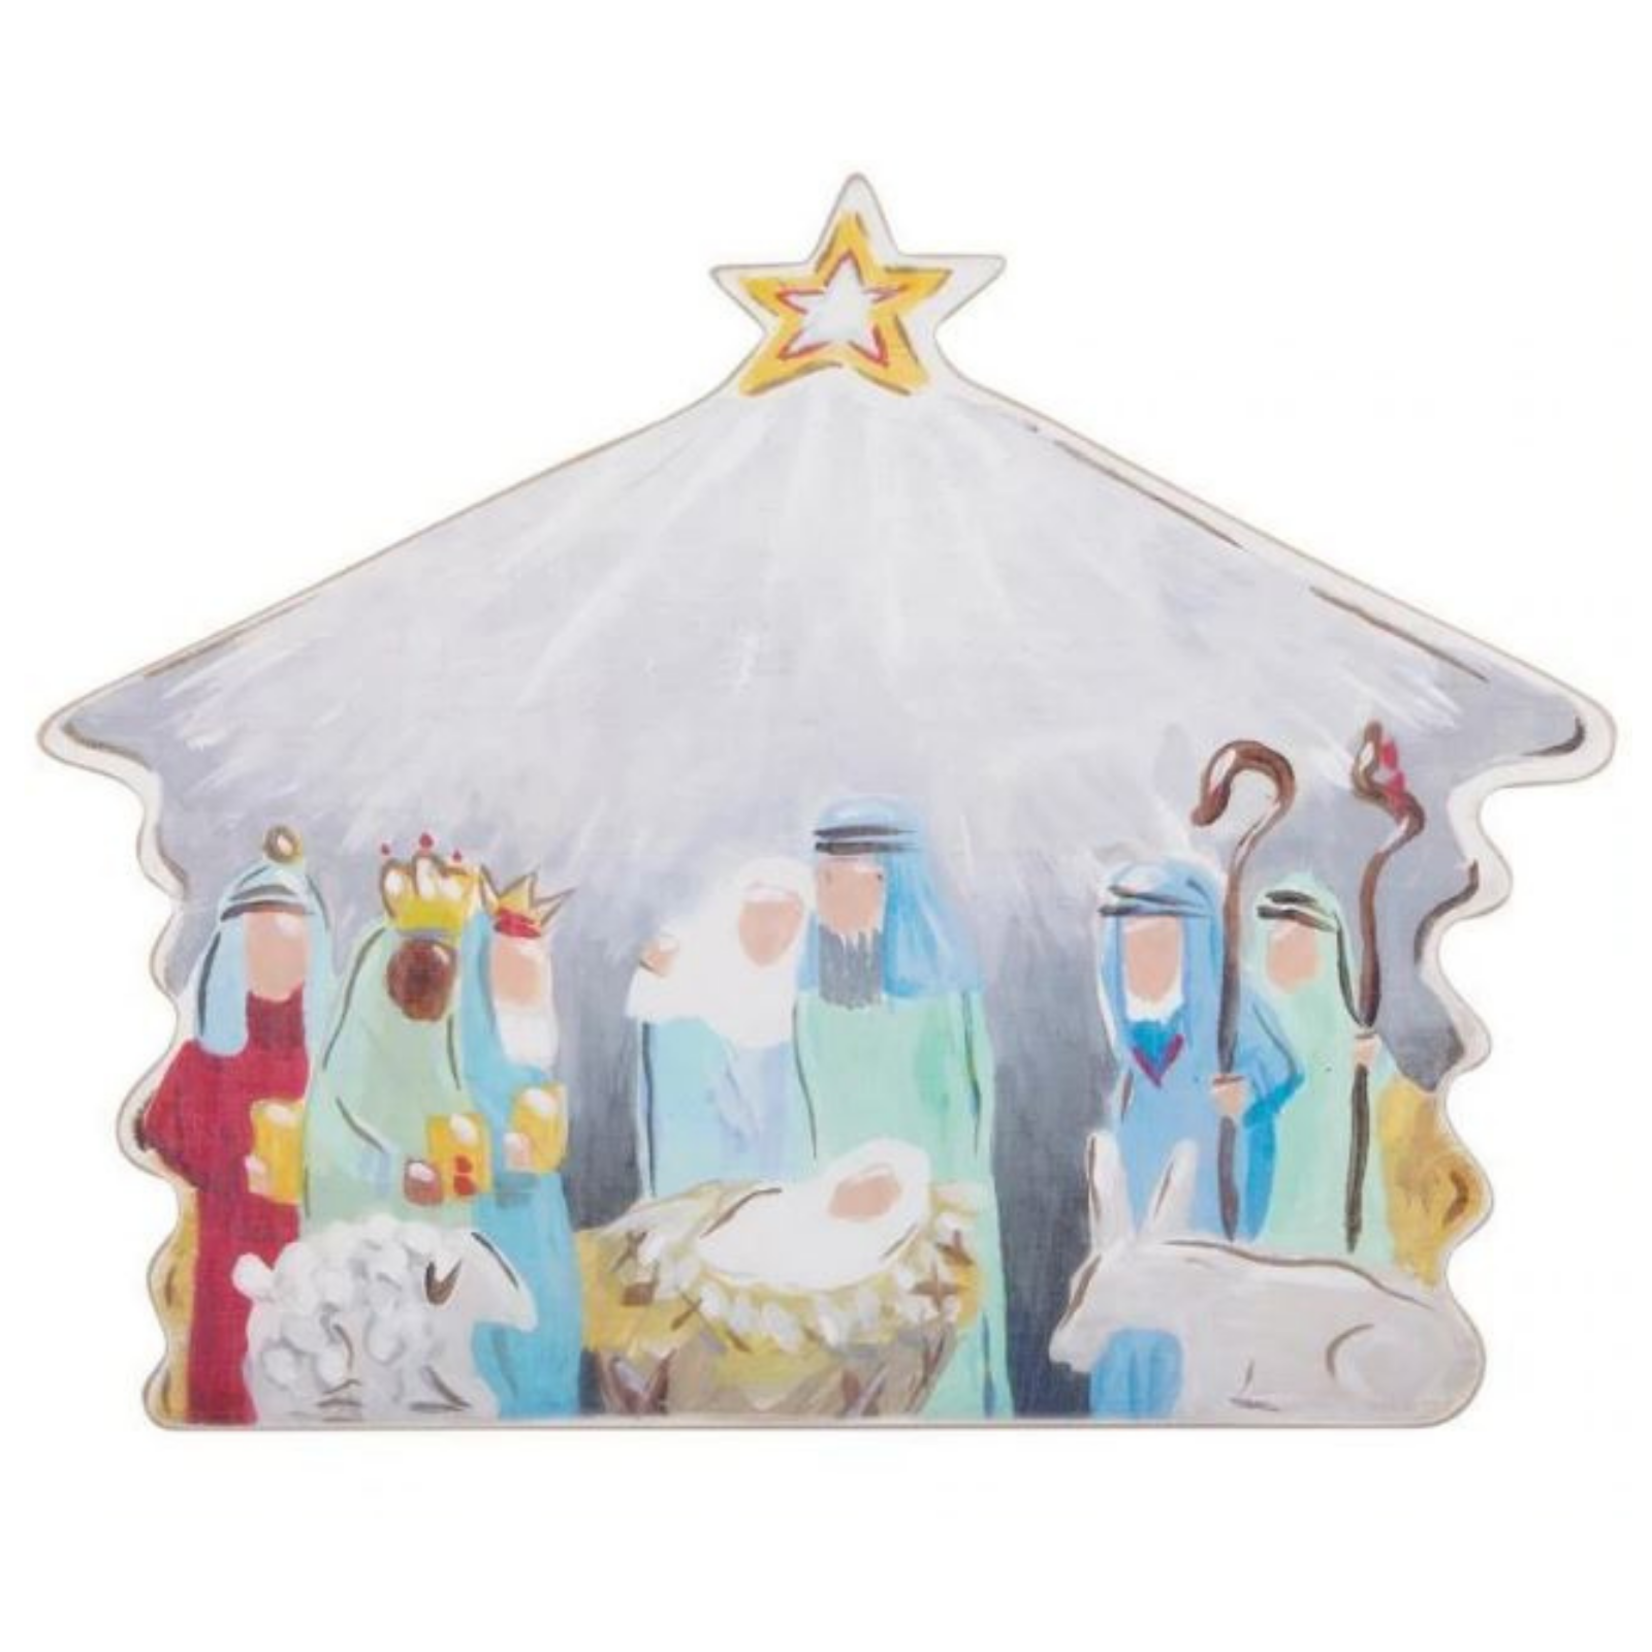 Glory Haus Nativity Board